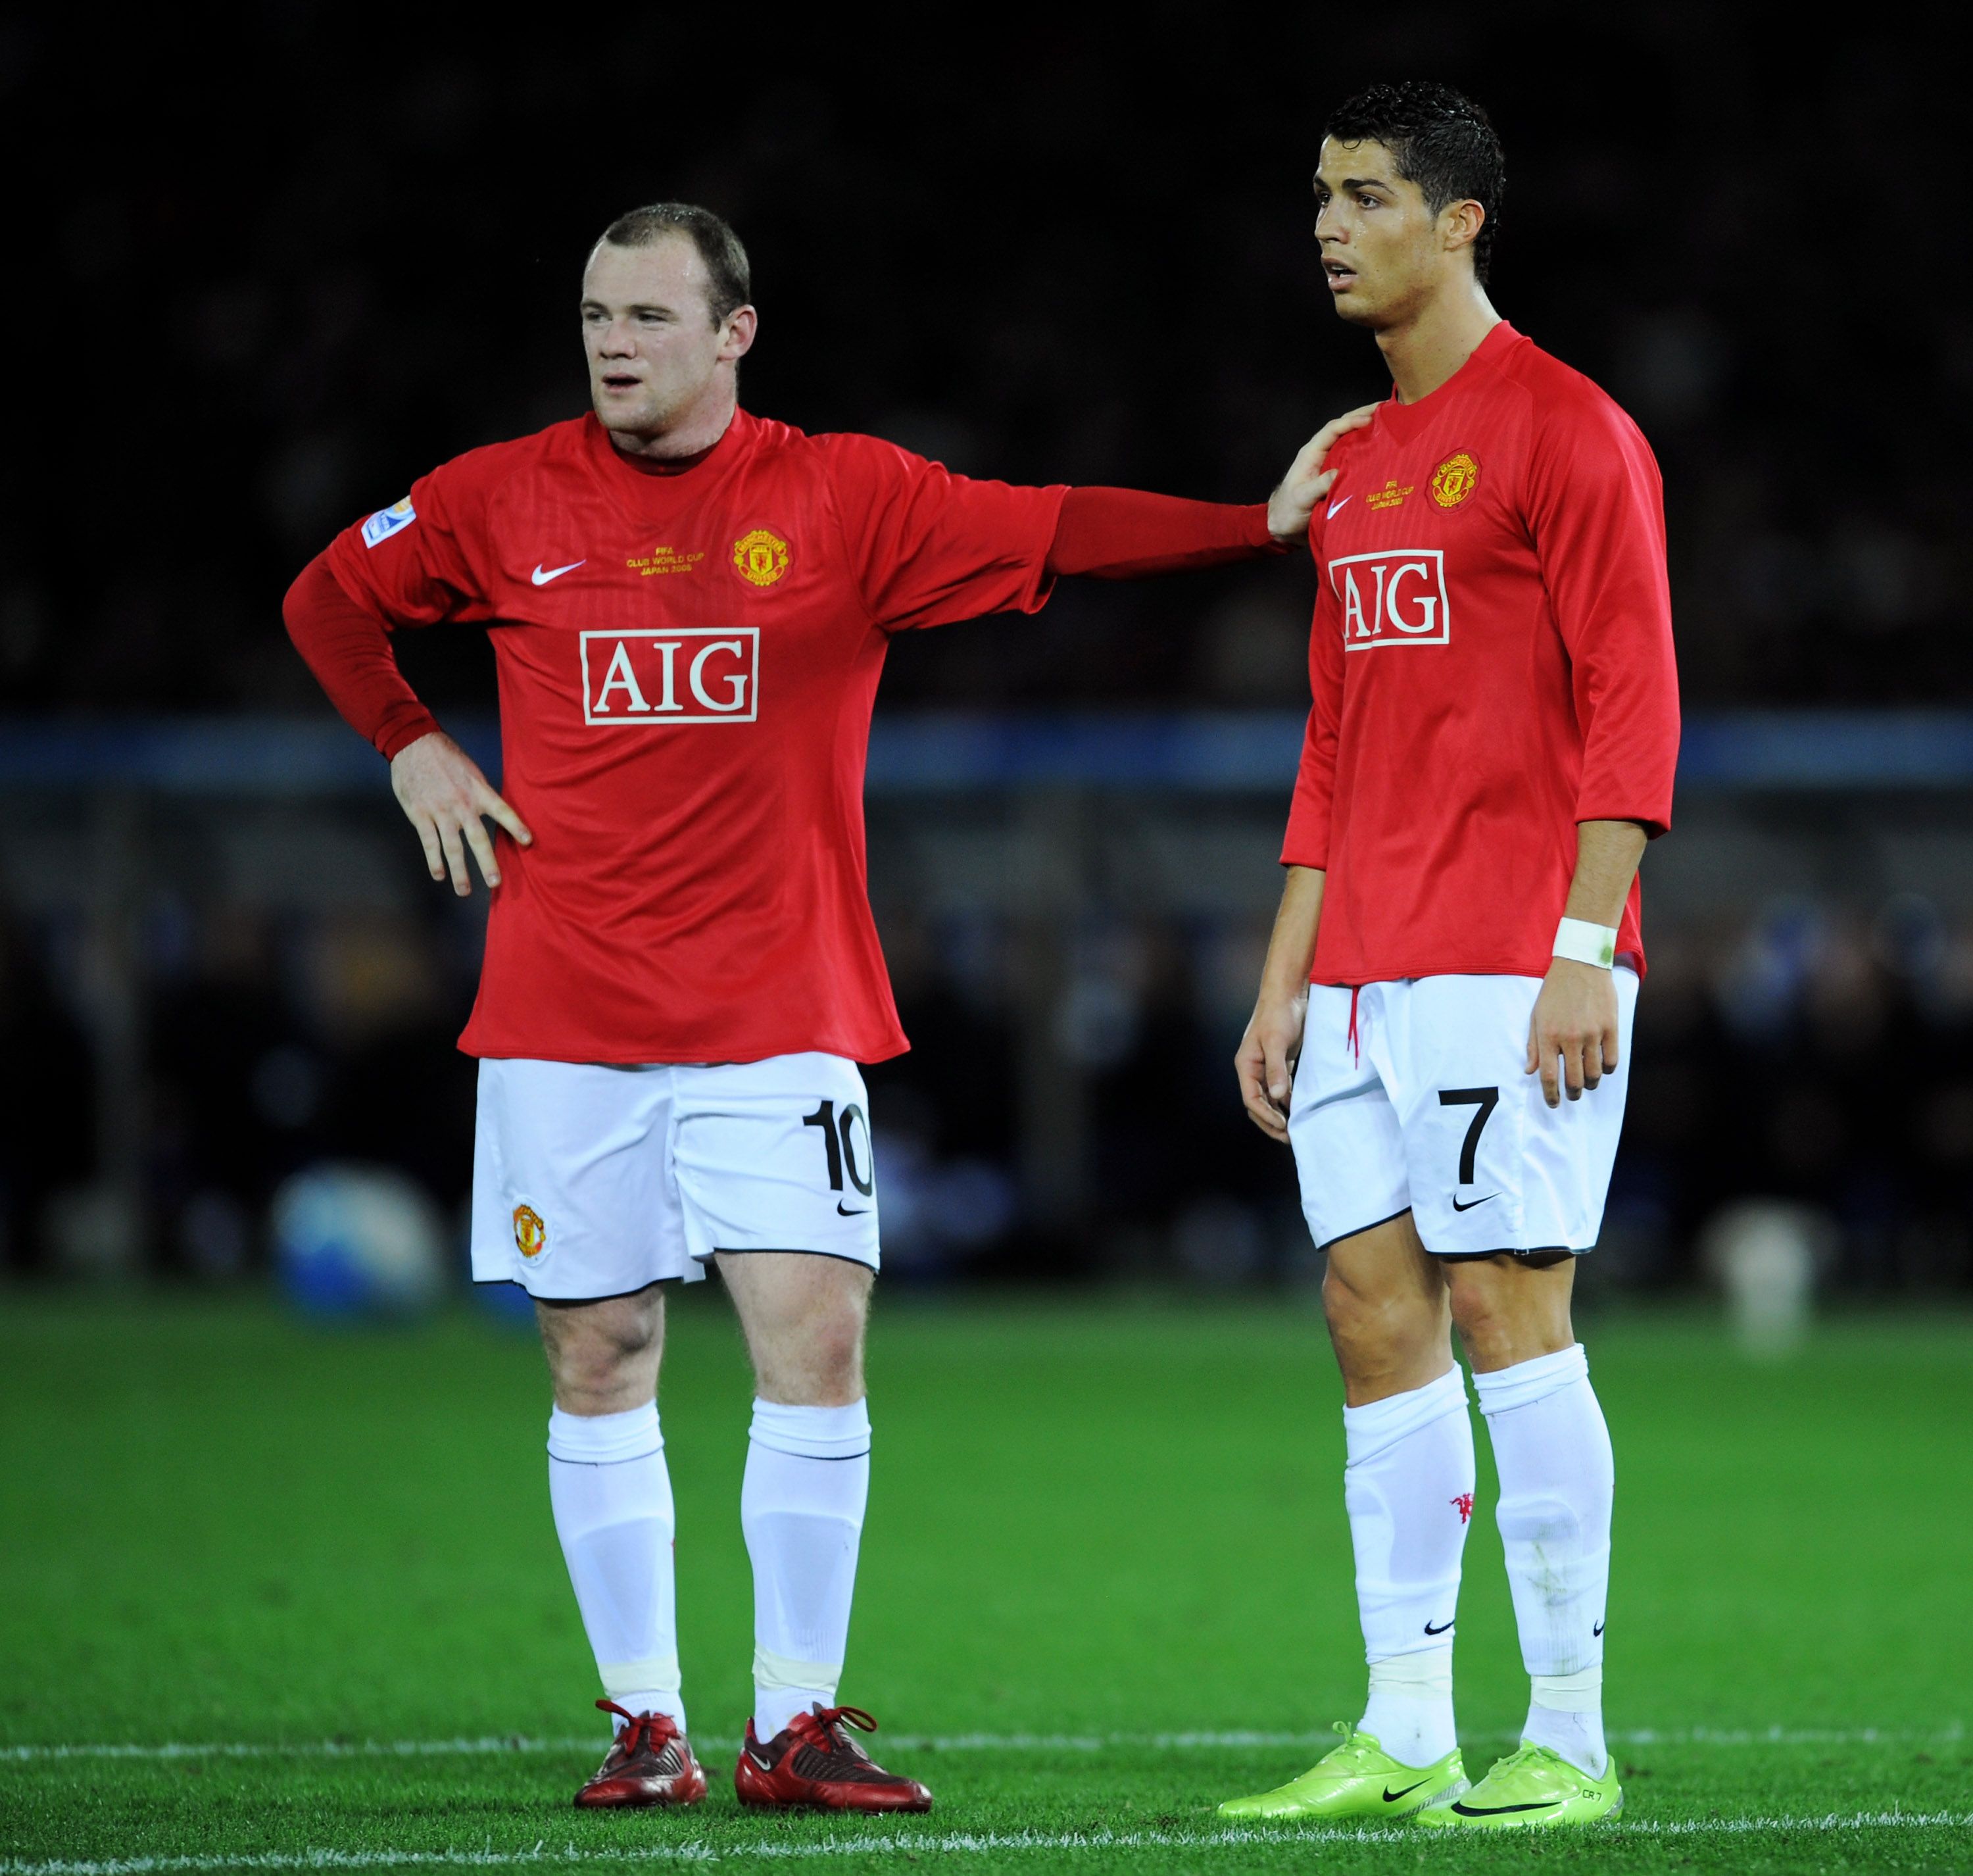 Wayne Rooney and Cristiano Ronaldo during a Man Utd game